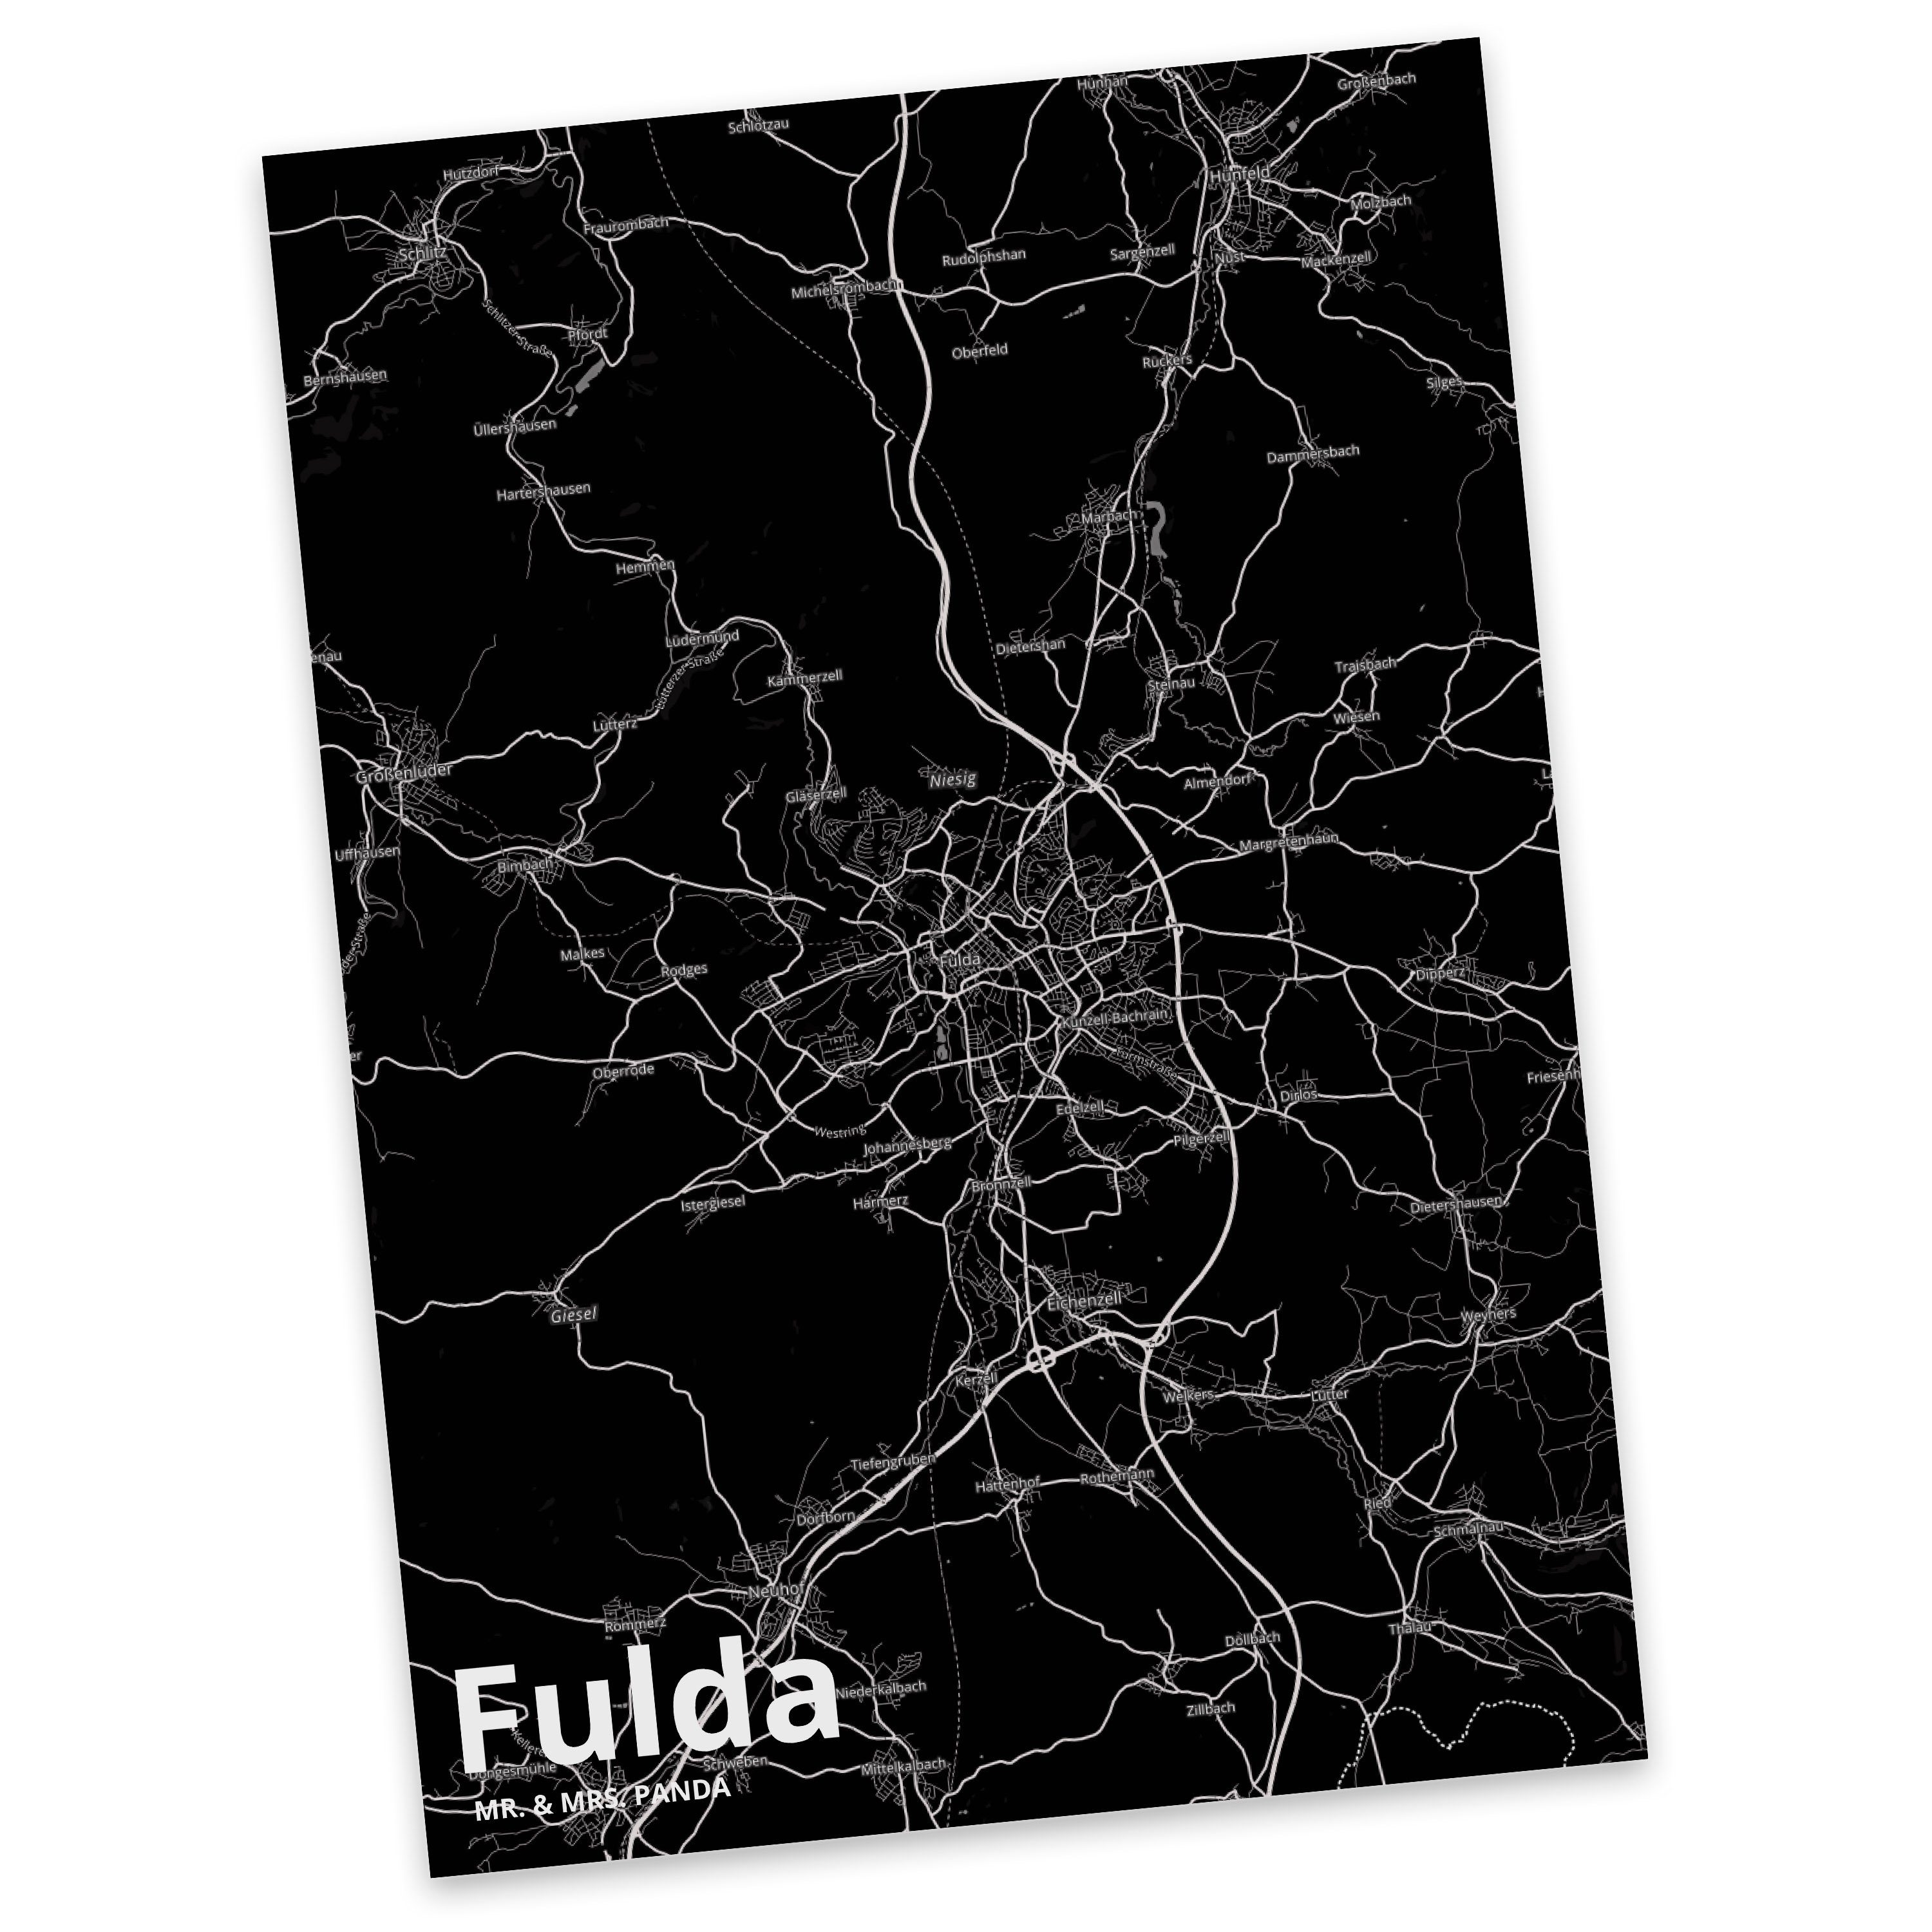 Mr. & Mrs. Panda Postkarte Fulda - Geschenk, Dankeskarte, Städte, Geburtstagskarte, Stadt Dorf K